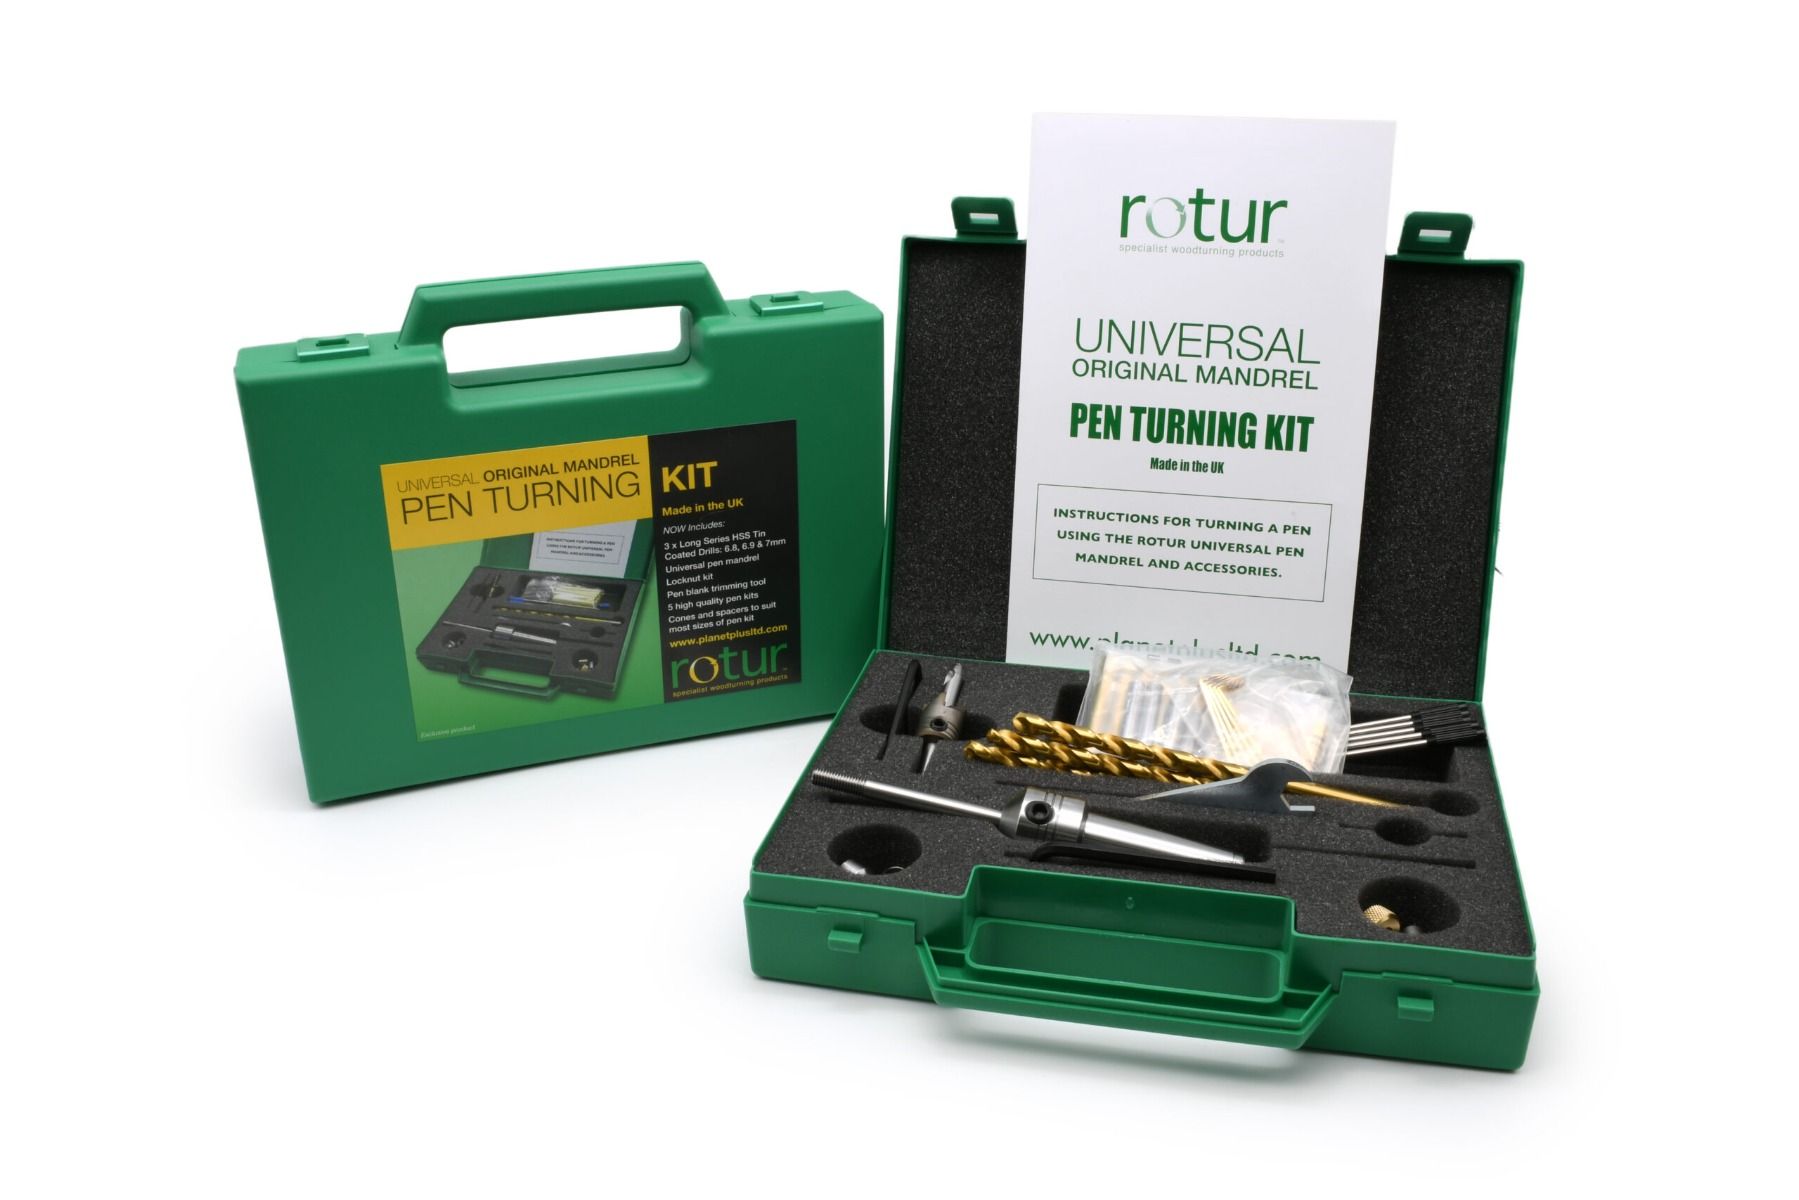 Rotur Original Pen Turning Kit in Case